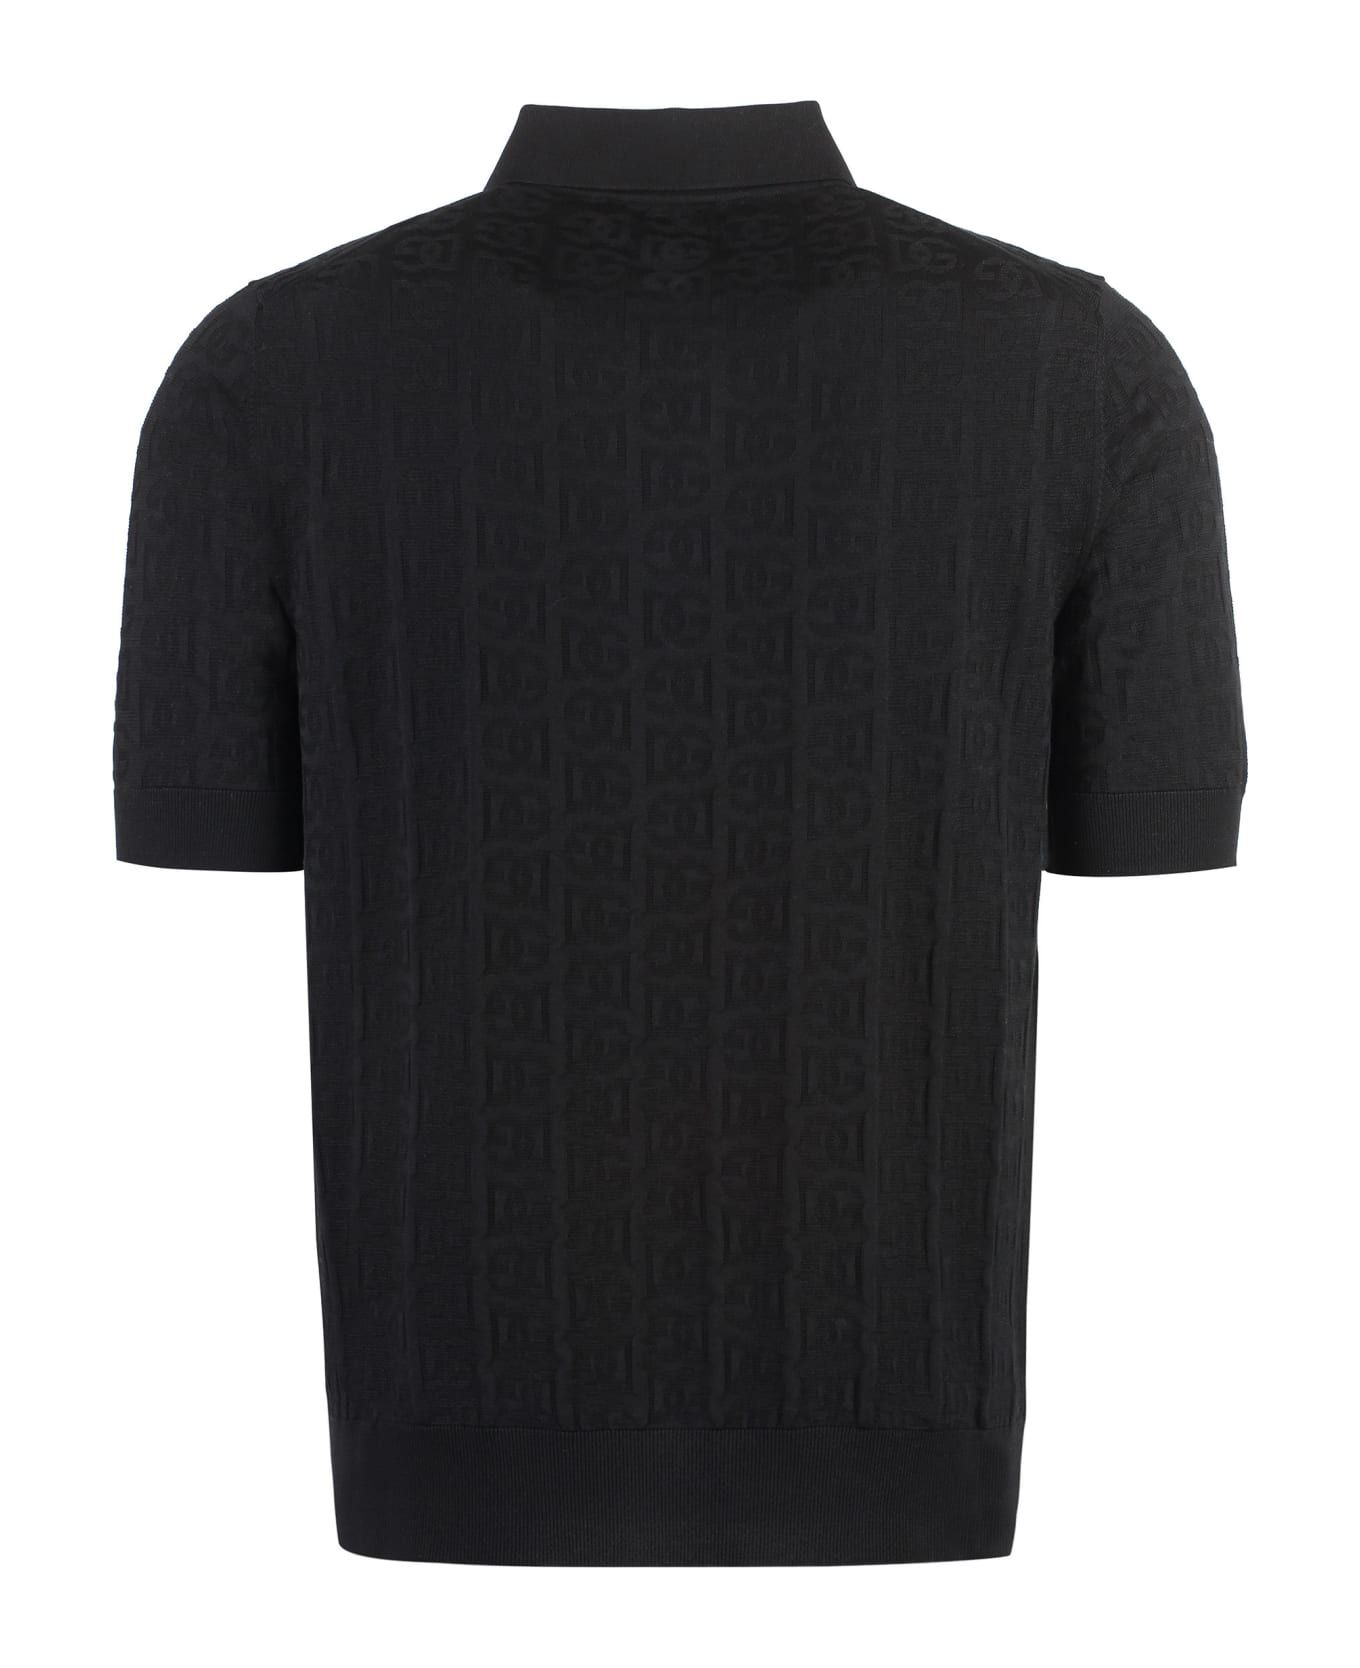 Dolce & Gabbana Jacquard Knit Polo Shirt - black